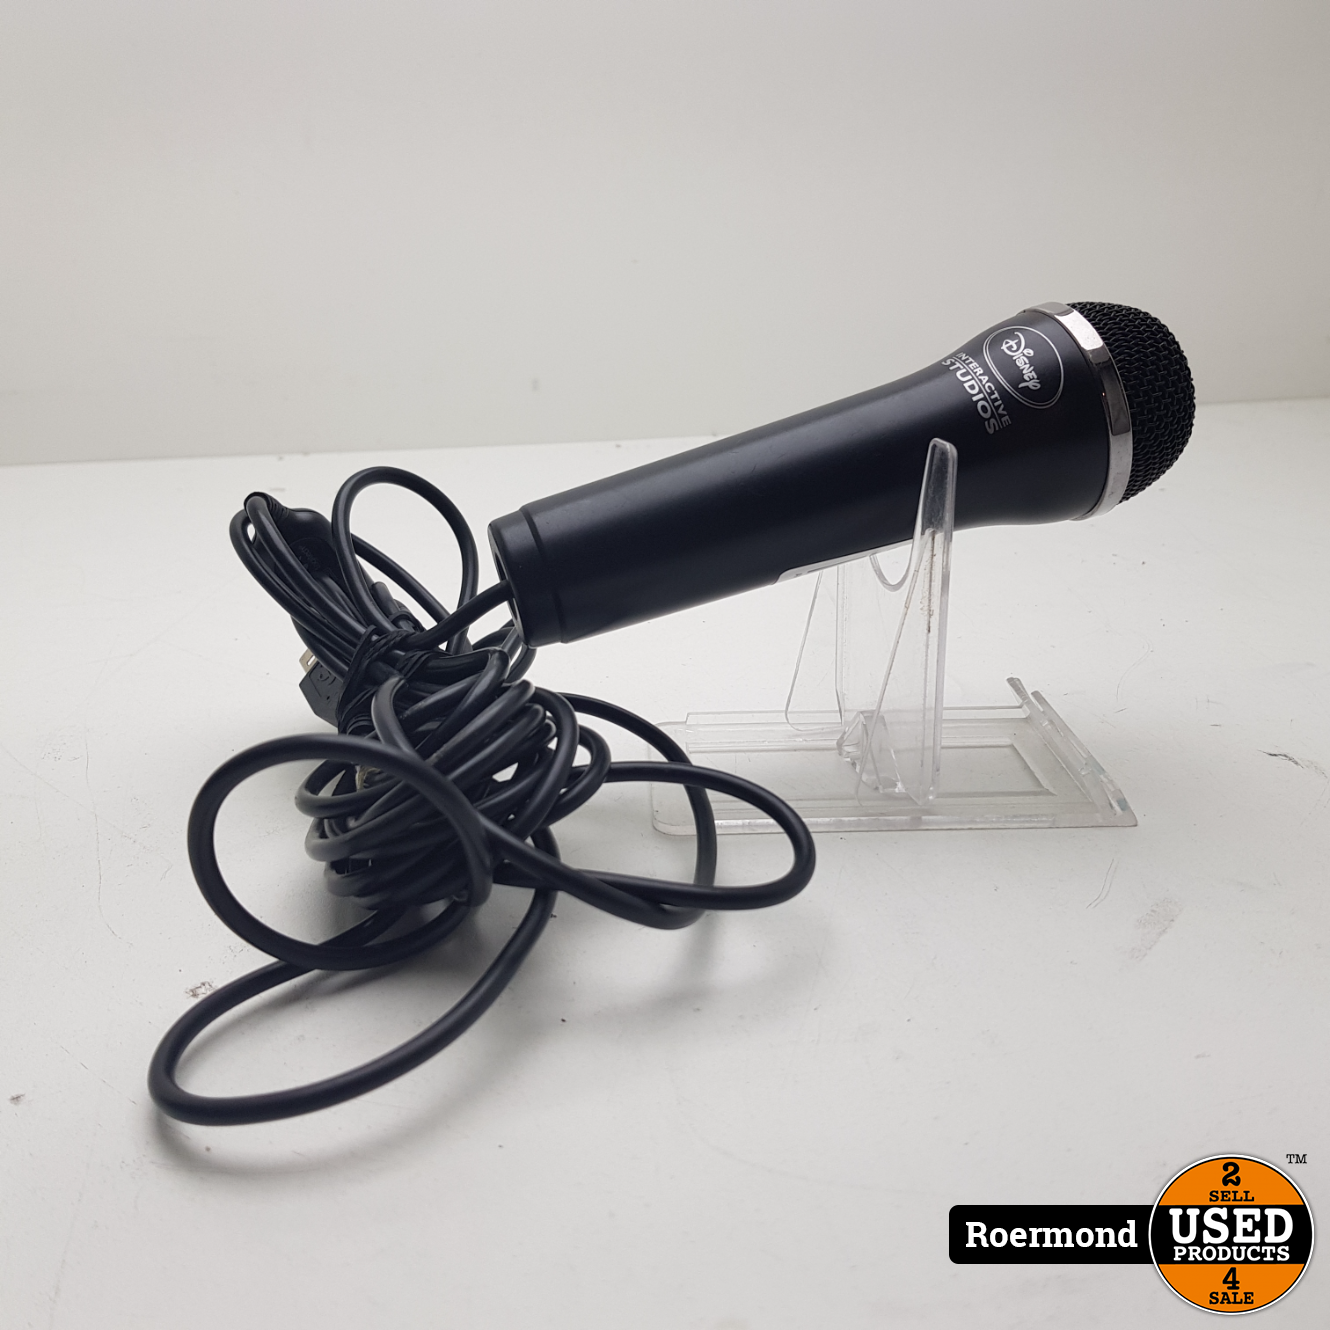 Melodieus Clam Deskundige disney Disney Microfoon met USB aansluiting I Zgan - Used Products Roermond